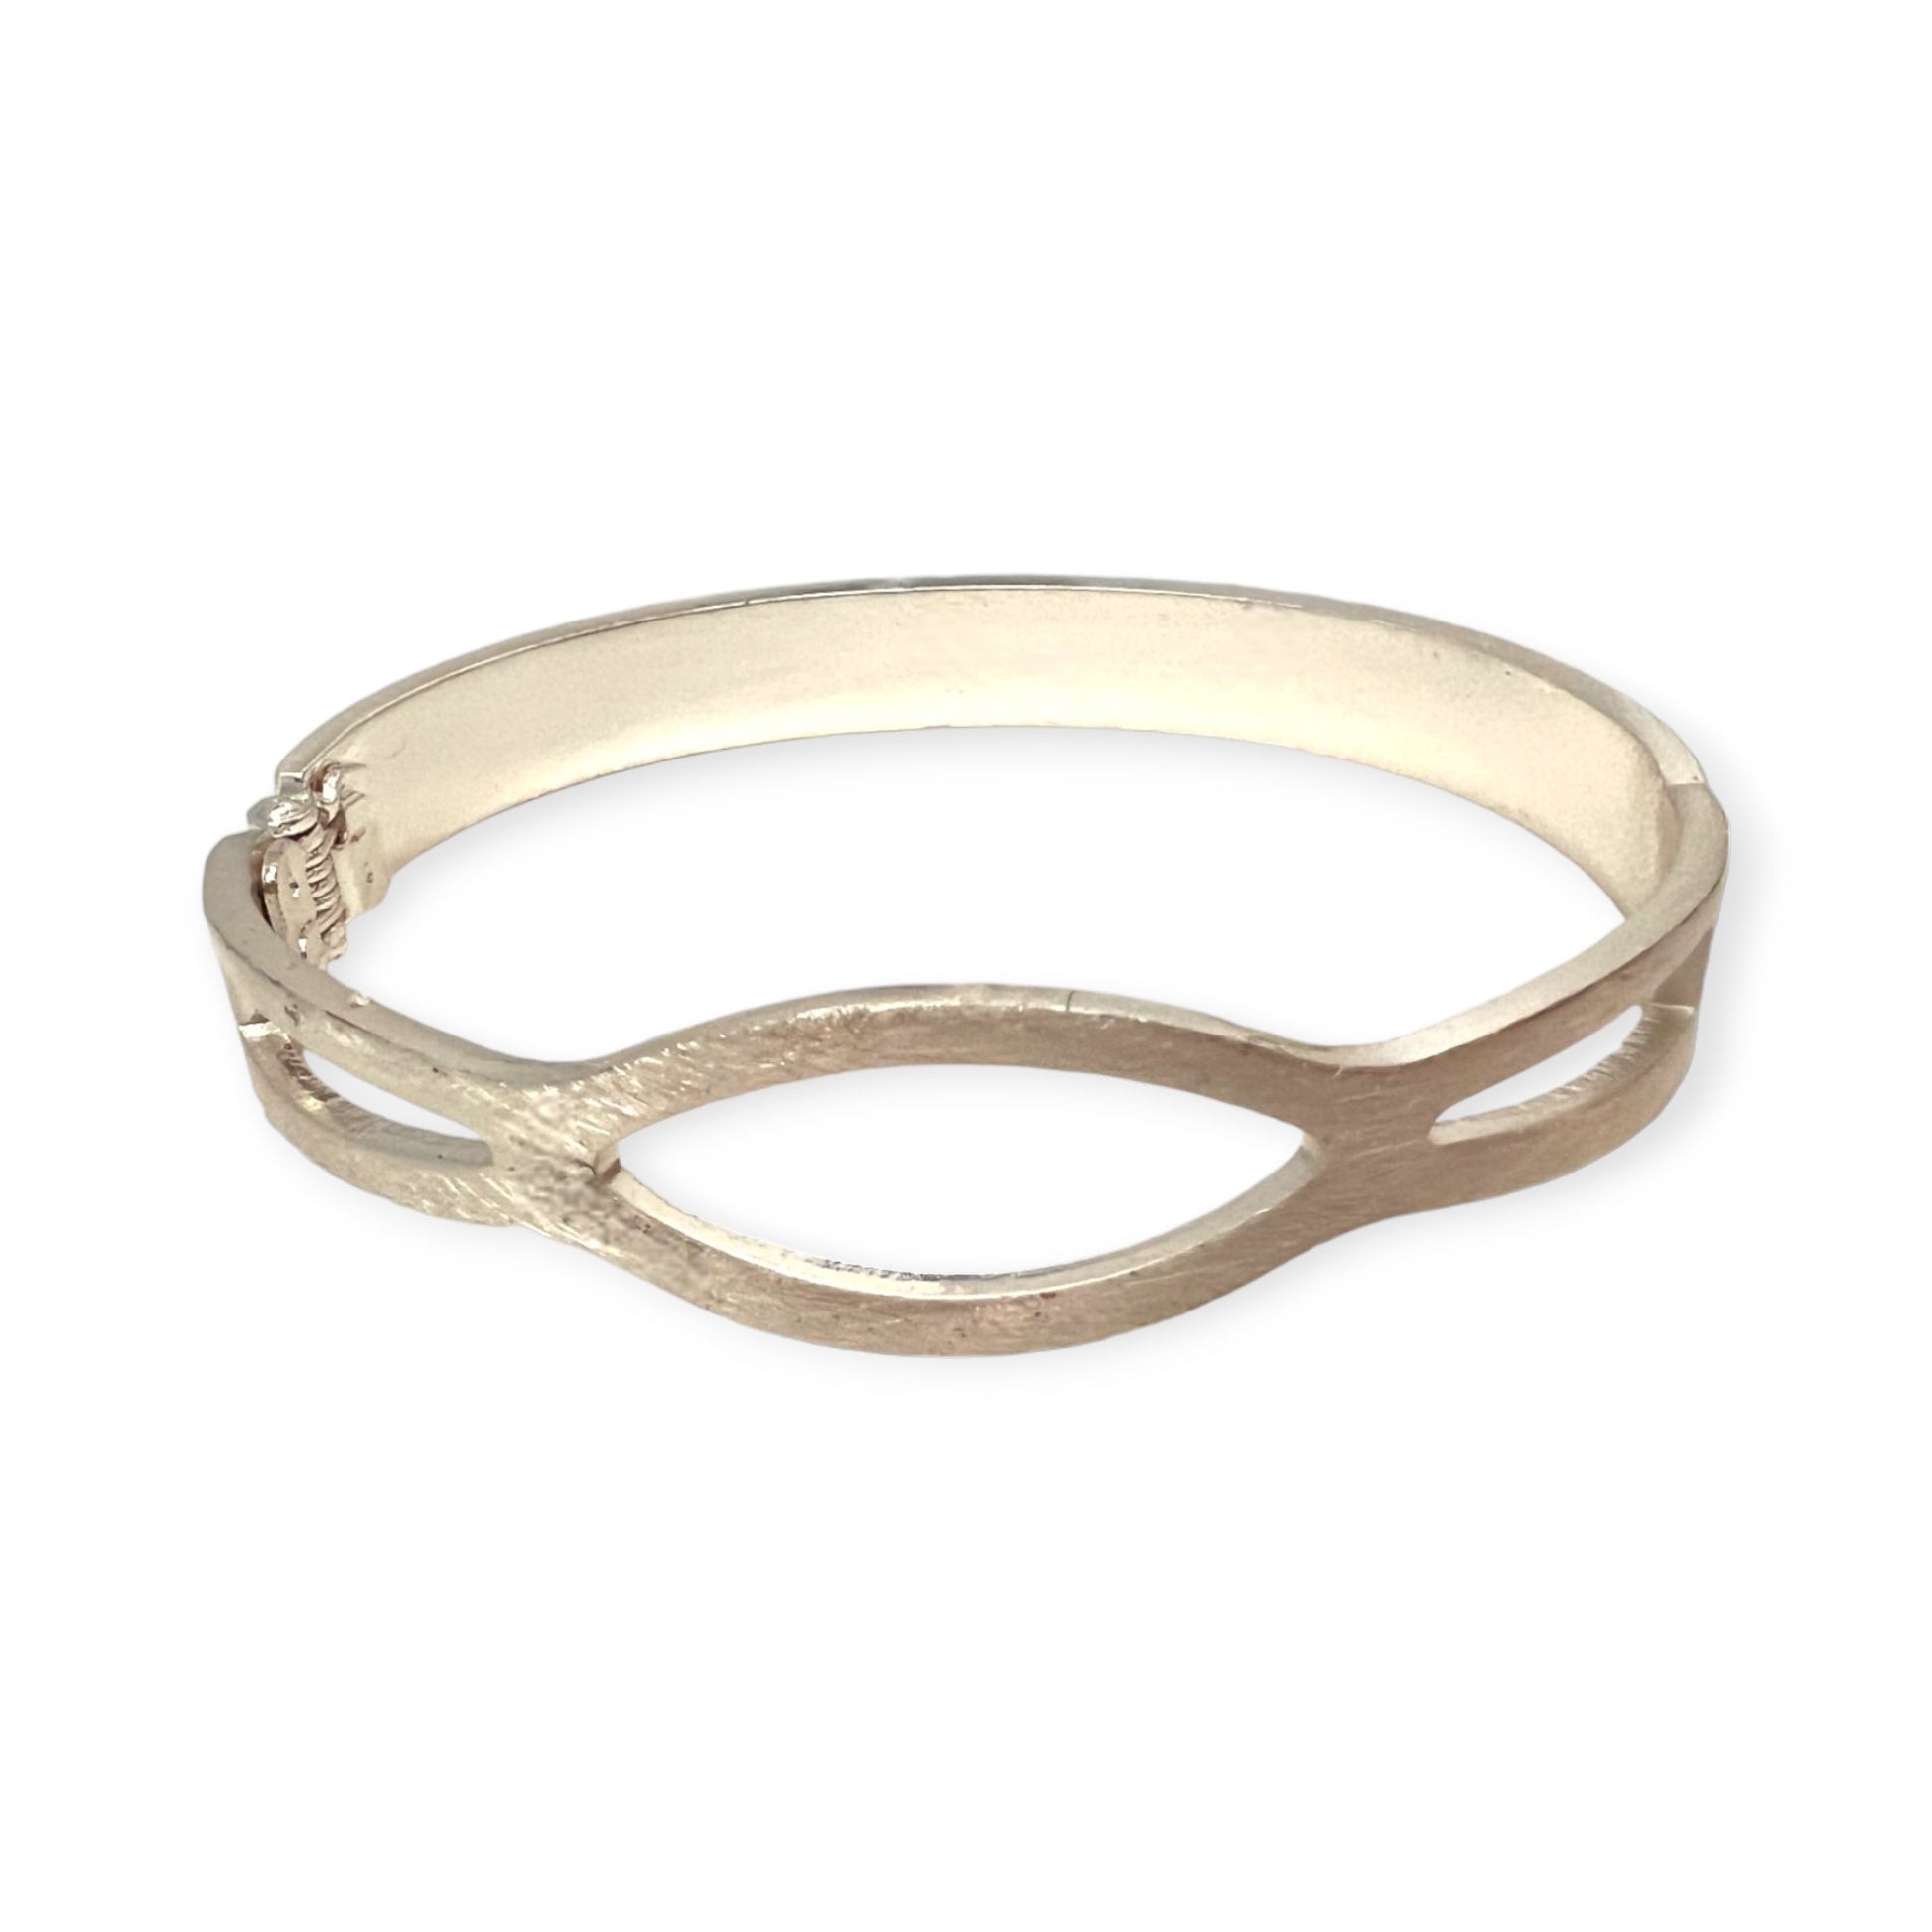 Oval cut-out bracelet with hinge - Sundara Joon